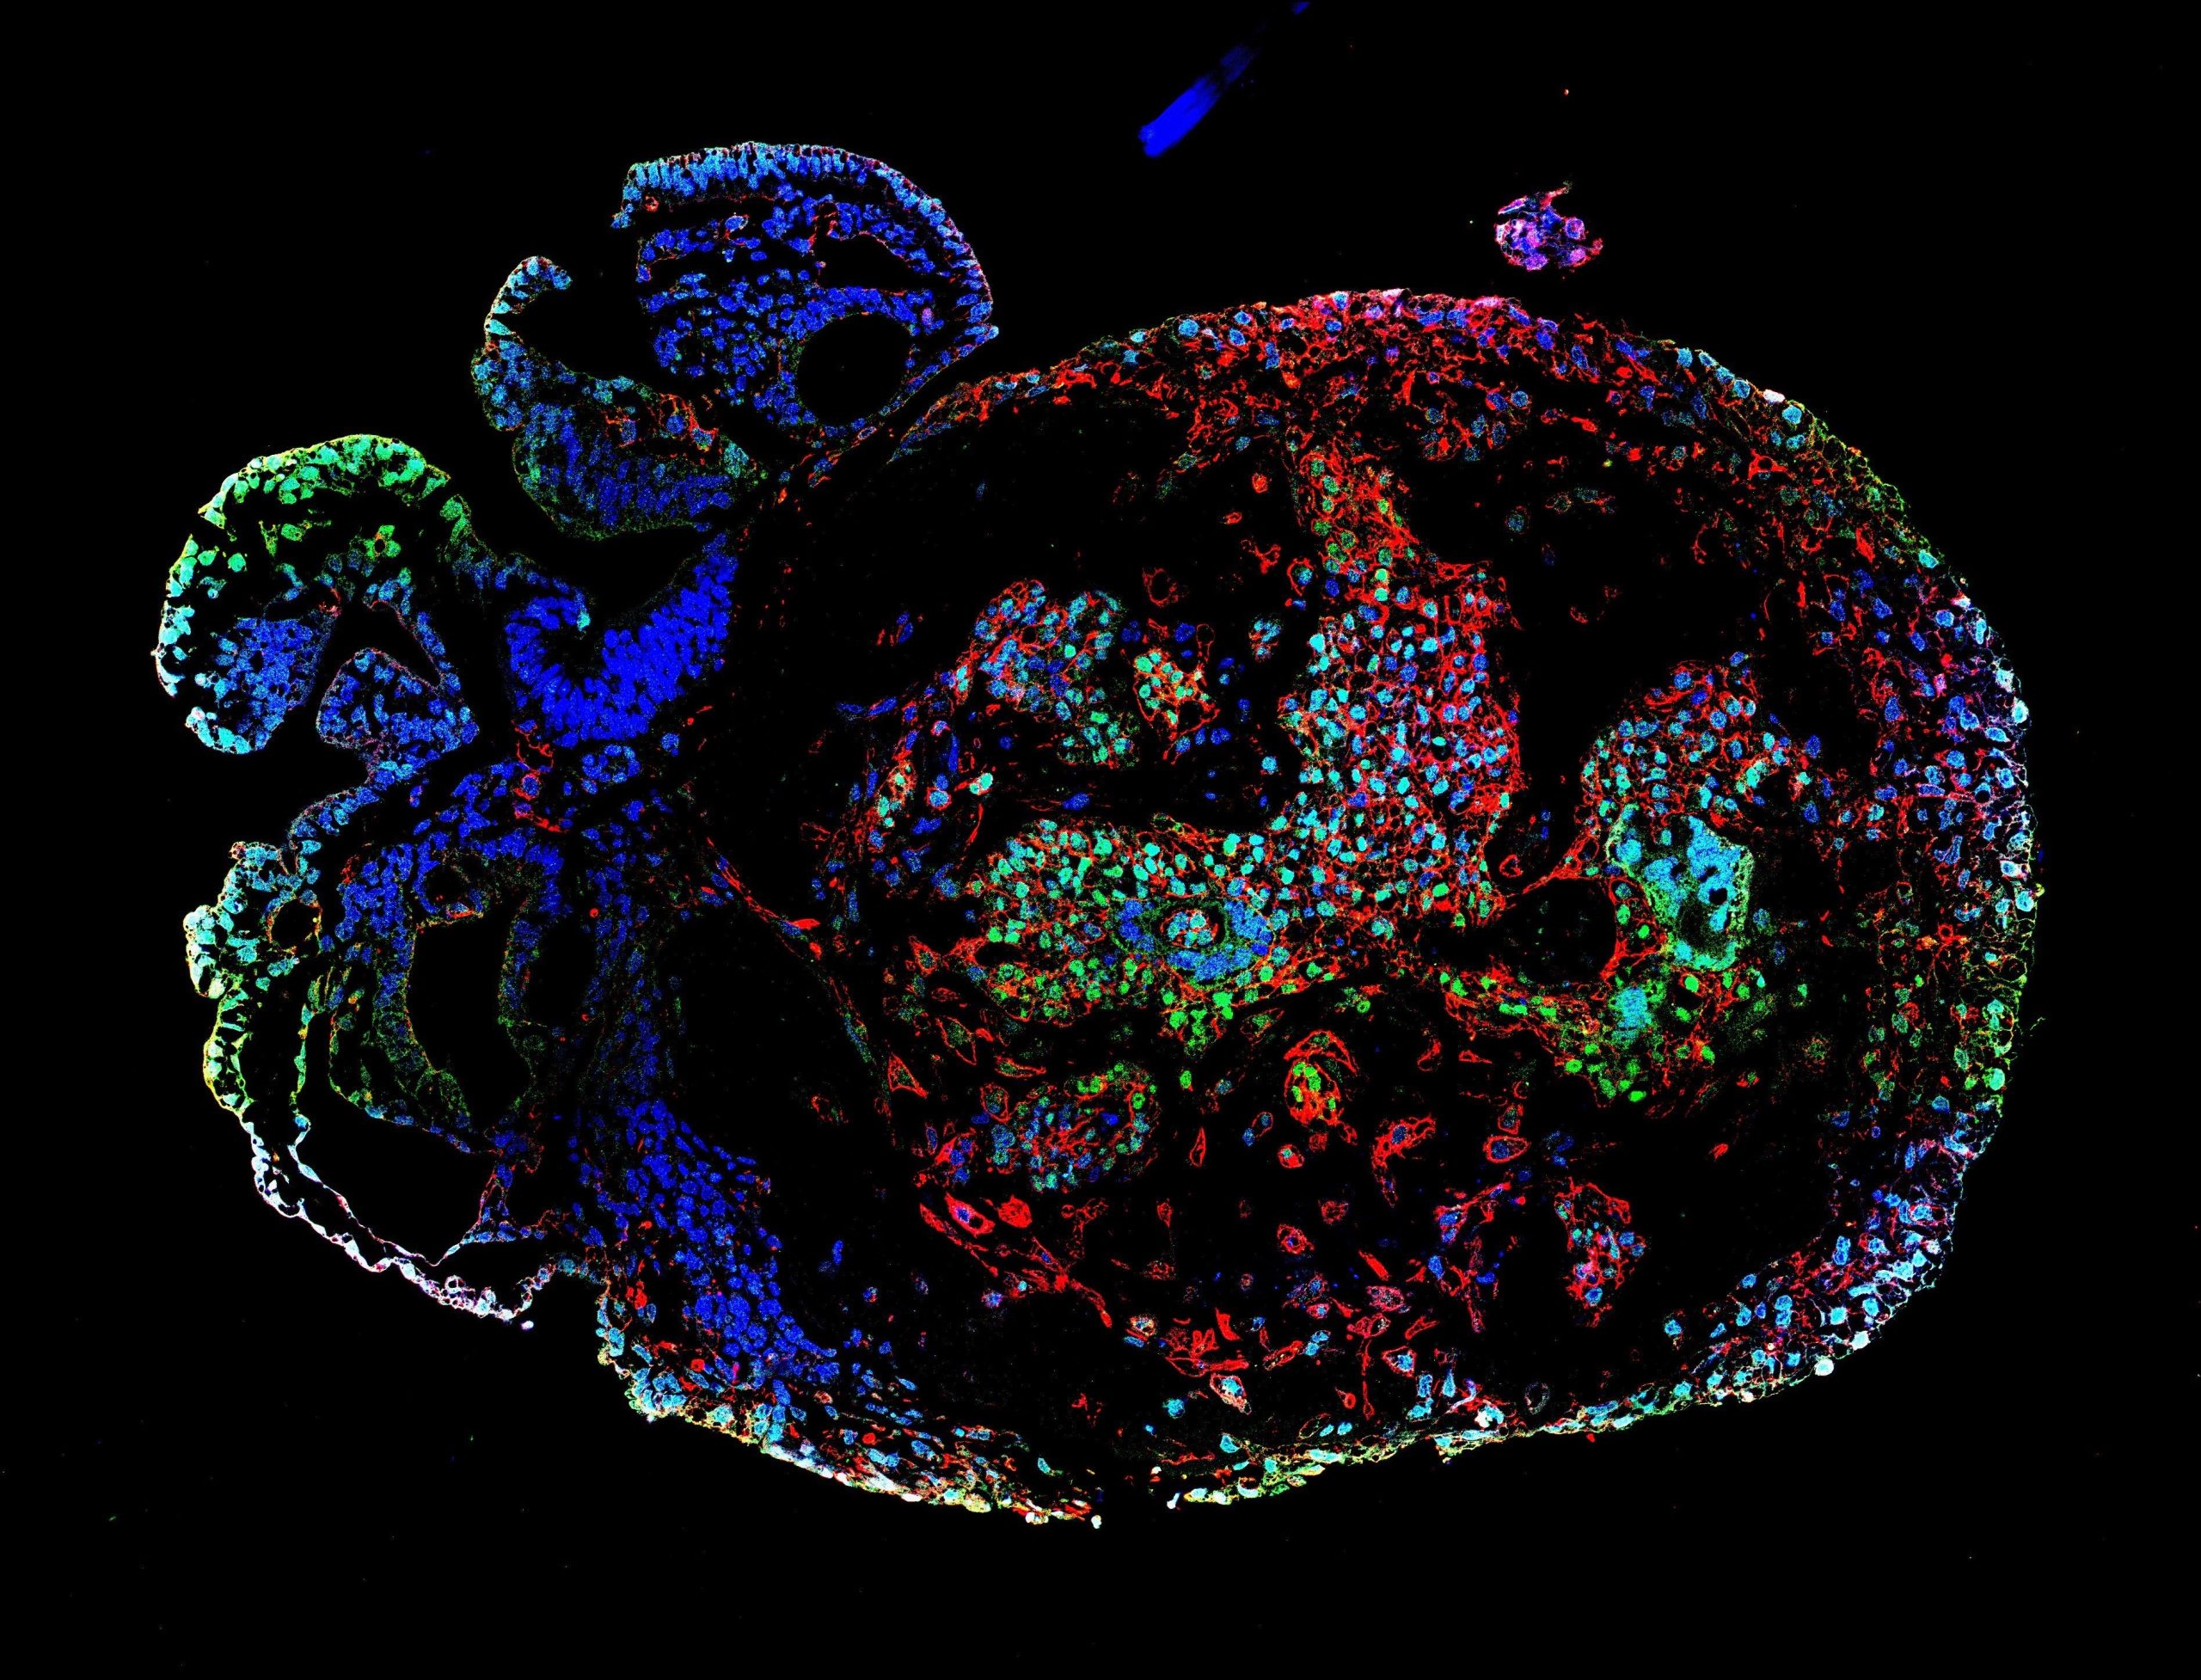 Lab-Grown Monkey Embryos Reveal in 3-D How Organs Start